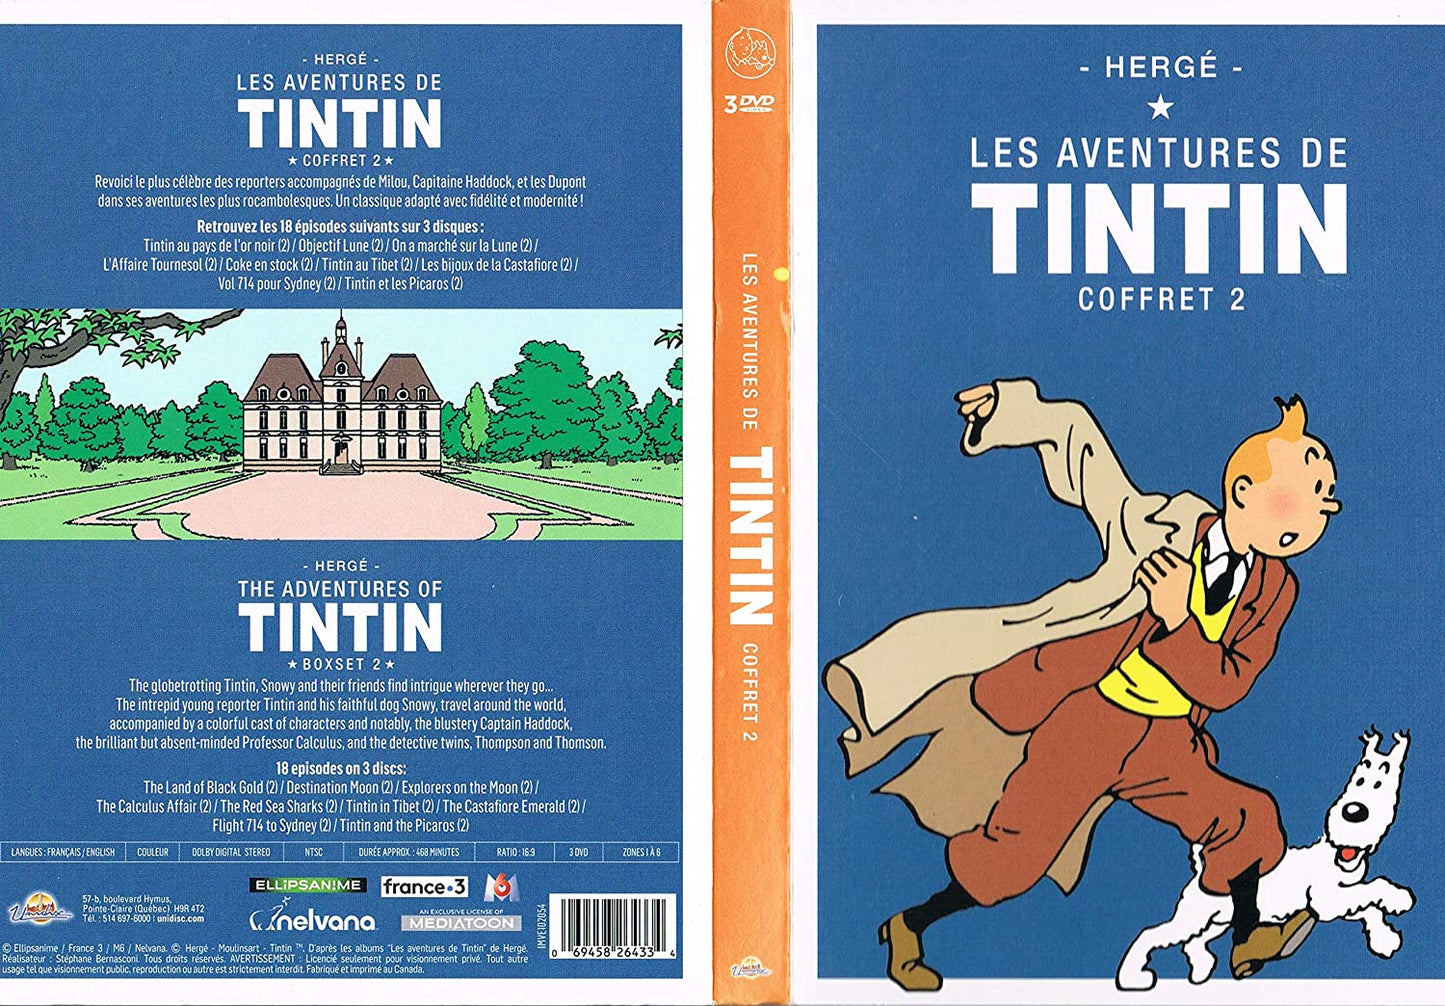 Les Aventures de Tintin Coffret 2 / The Adventures of Tintin Boxset 2